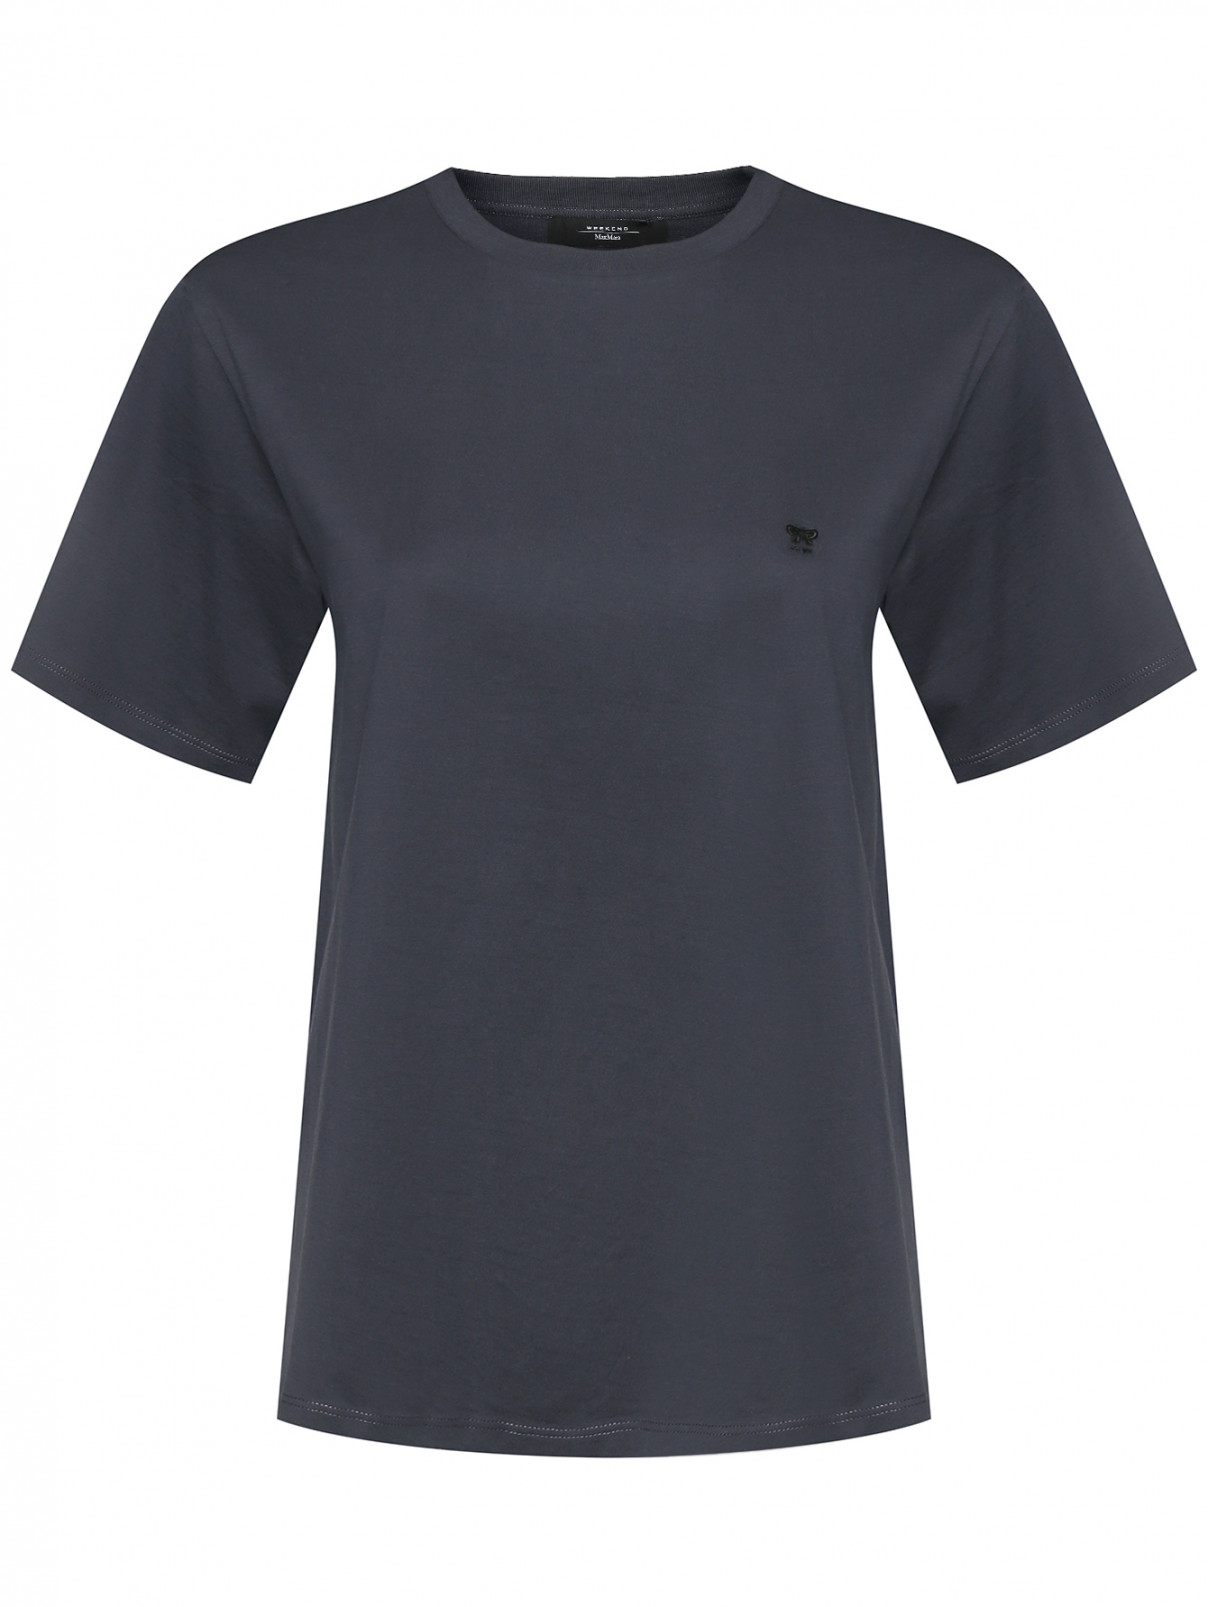 Базовая футболка Weekend Max Mara  –  Общий вид  – Цвет:  Серый